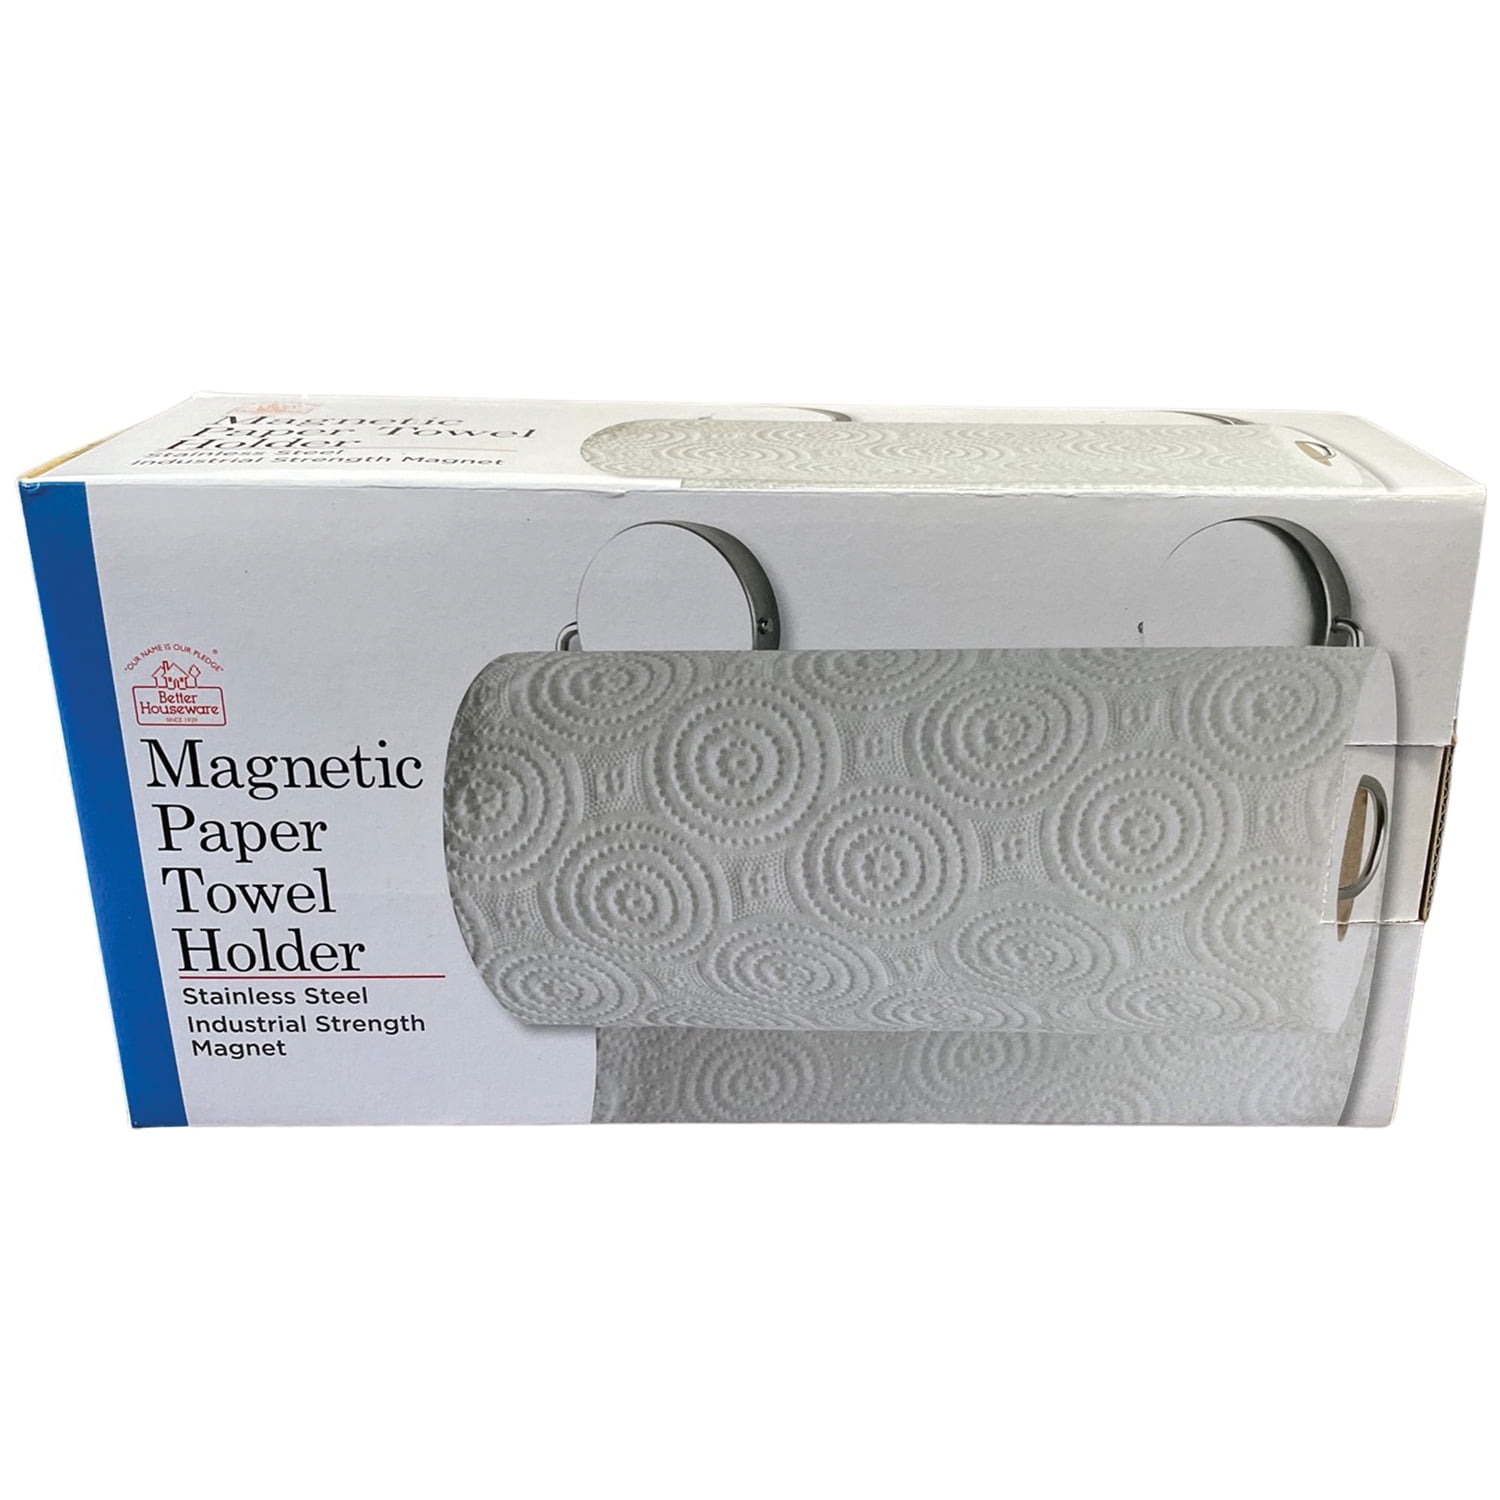 MessFree® Magnetic Roll Holder  Roll holder, Kitchen paper towel